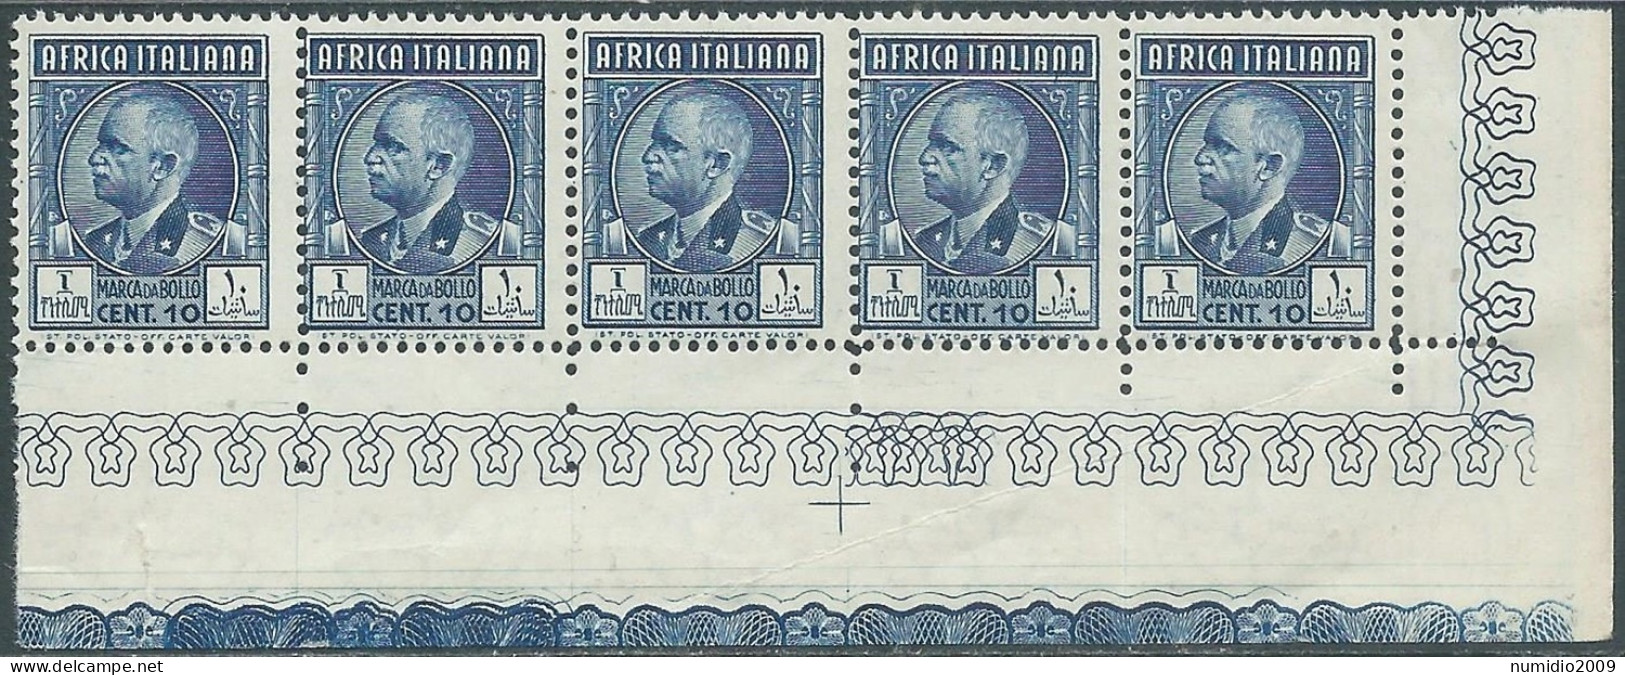 1939 AFRICA ITALIANA MARCA DA BOLLO 10 CENT BLOCCO DI 5 VALORI MNH ** - CZ39-3 - Italienisch Ost-Afrika